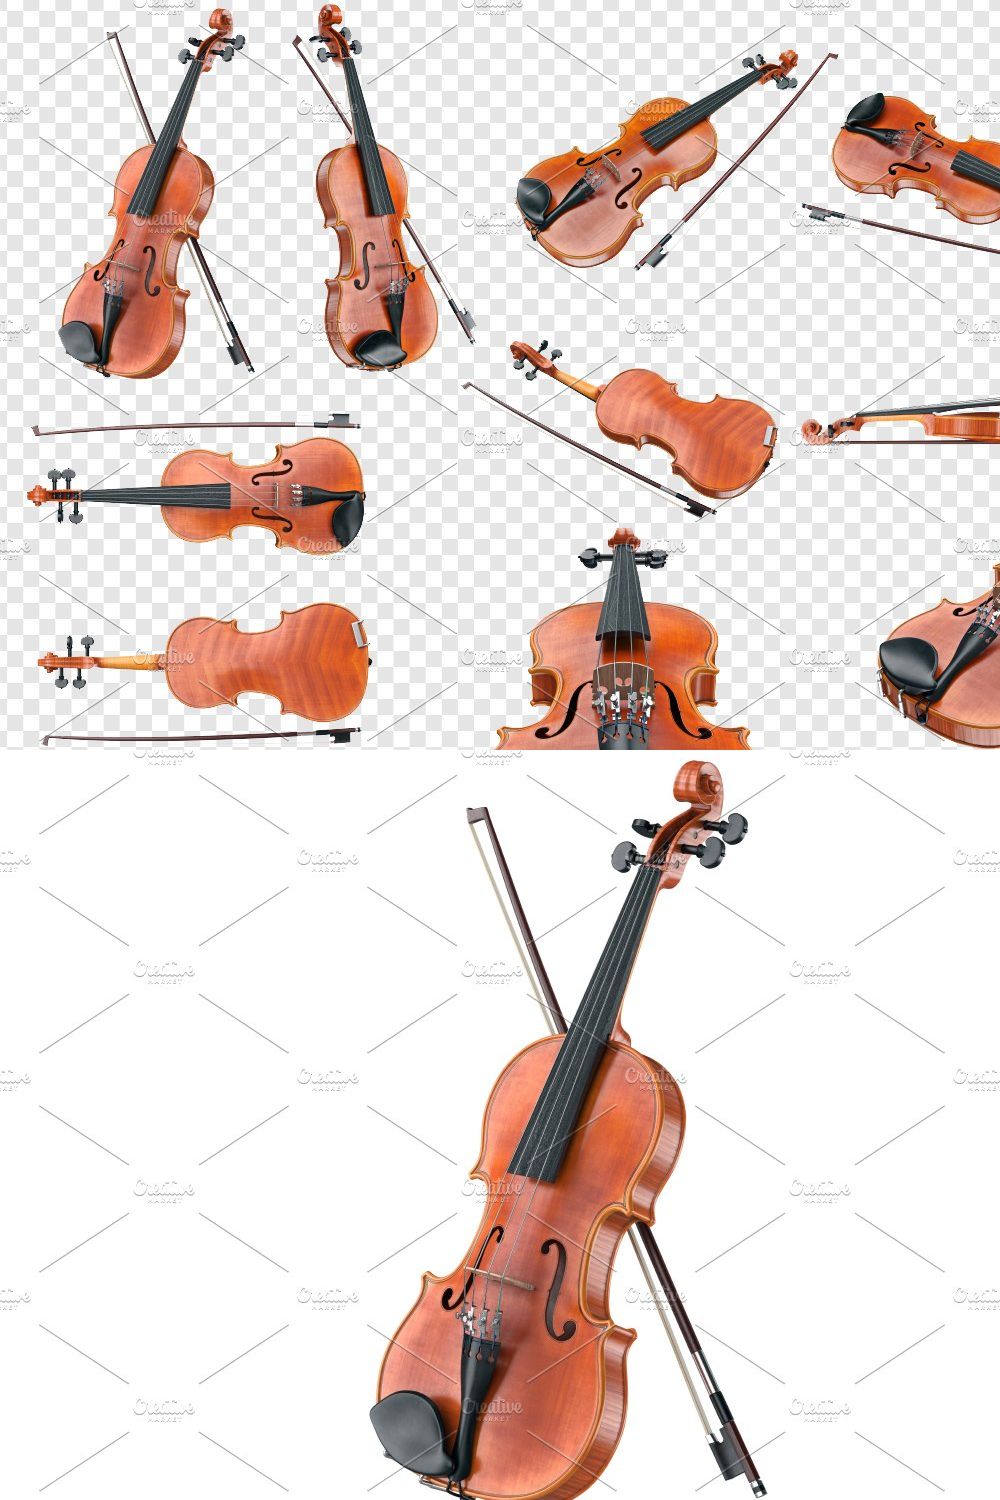 Violin musical equipment, set pinterest preview image.